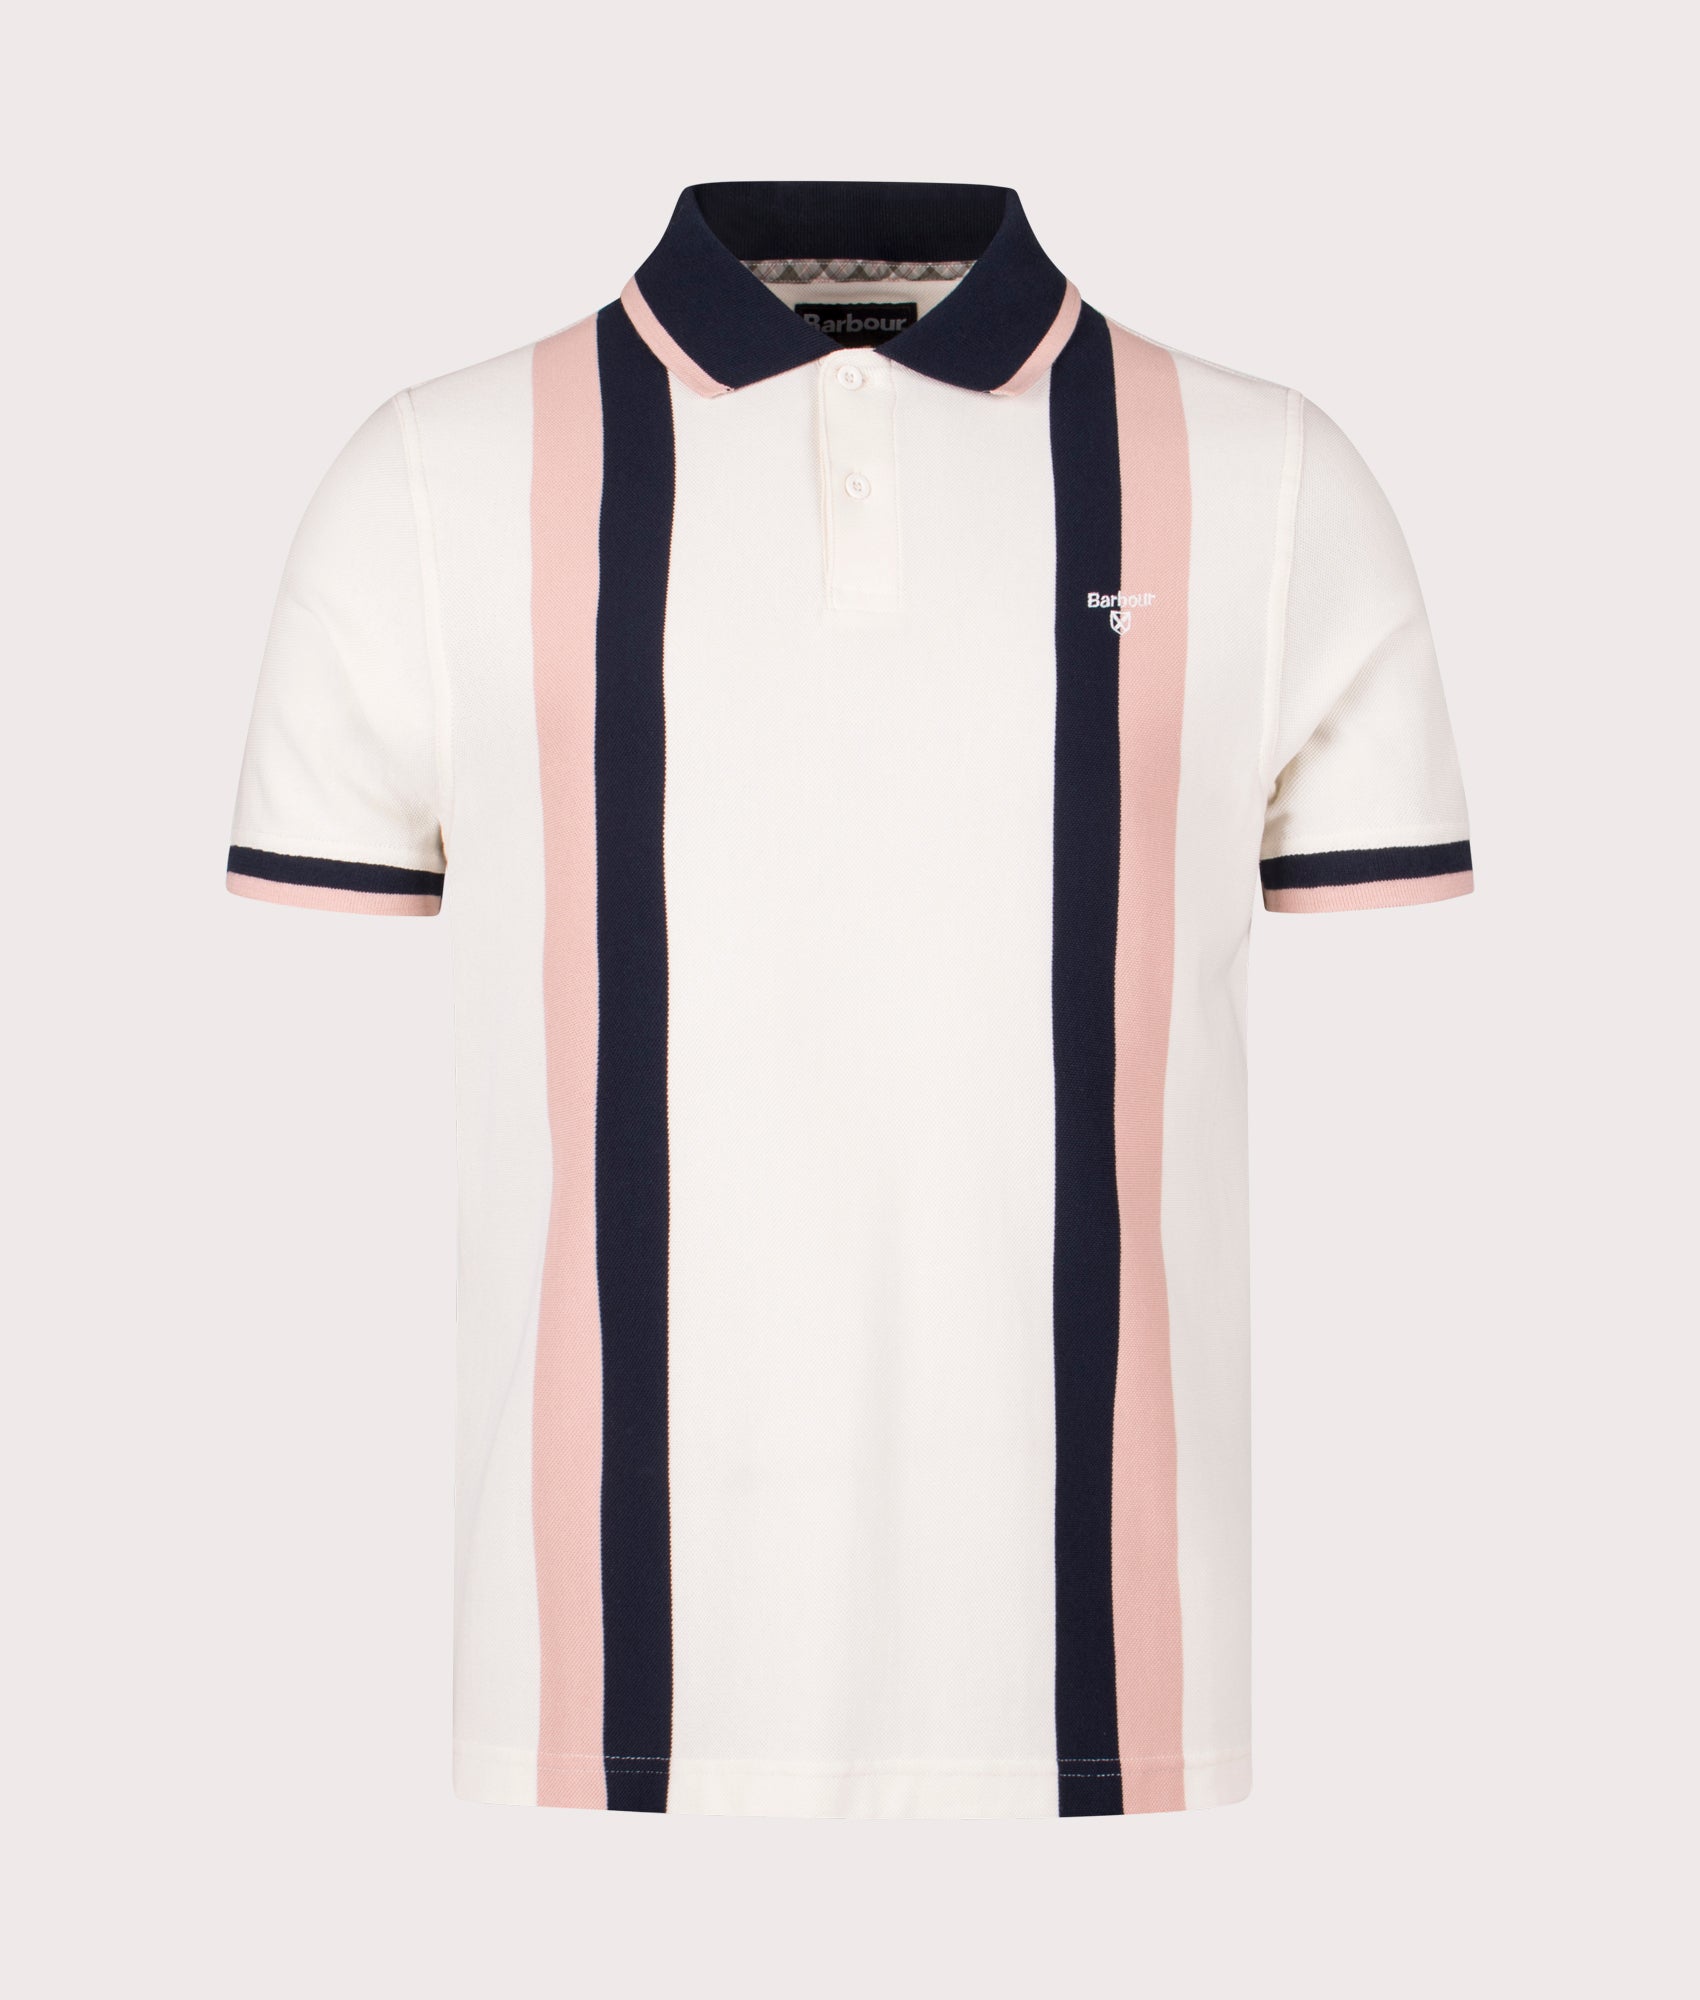 Barbour Lifestyle Mens Howdon Polo Shirt - Colour: WH32 Whisper White - Size: Medium